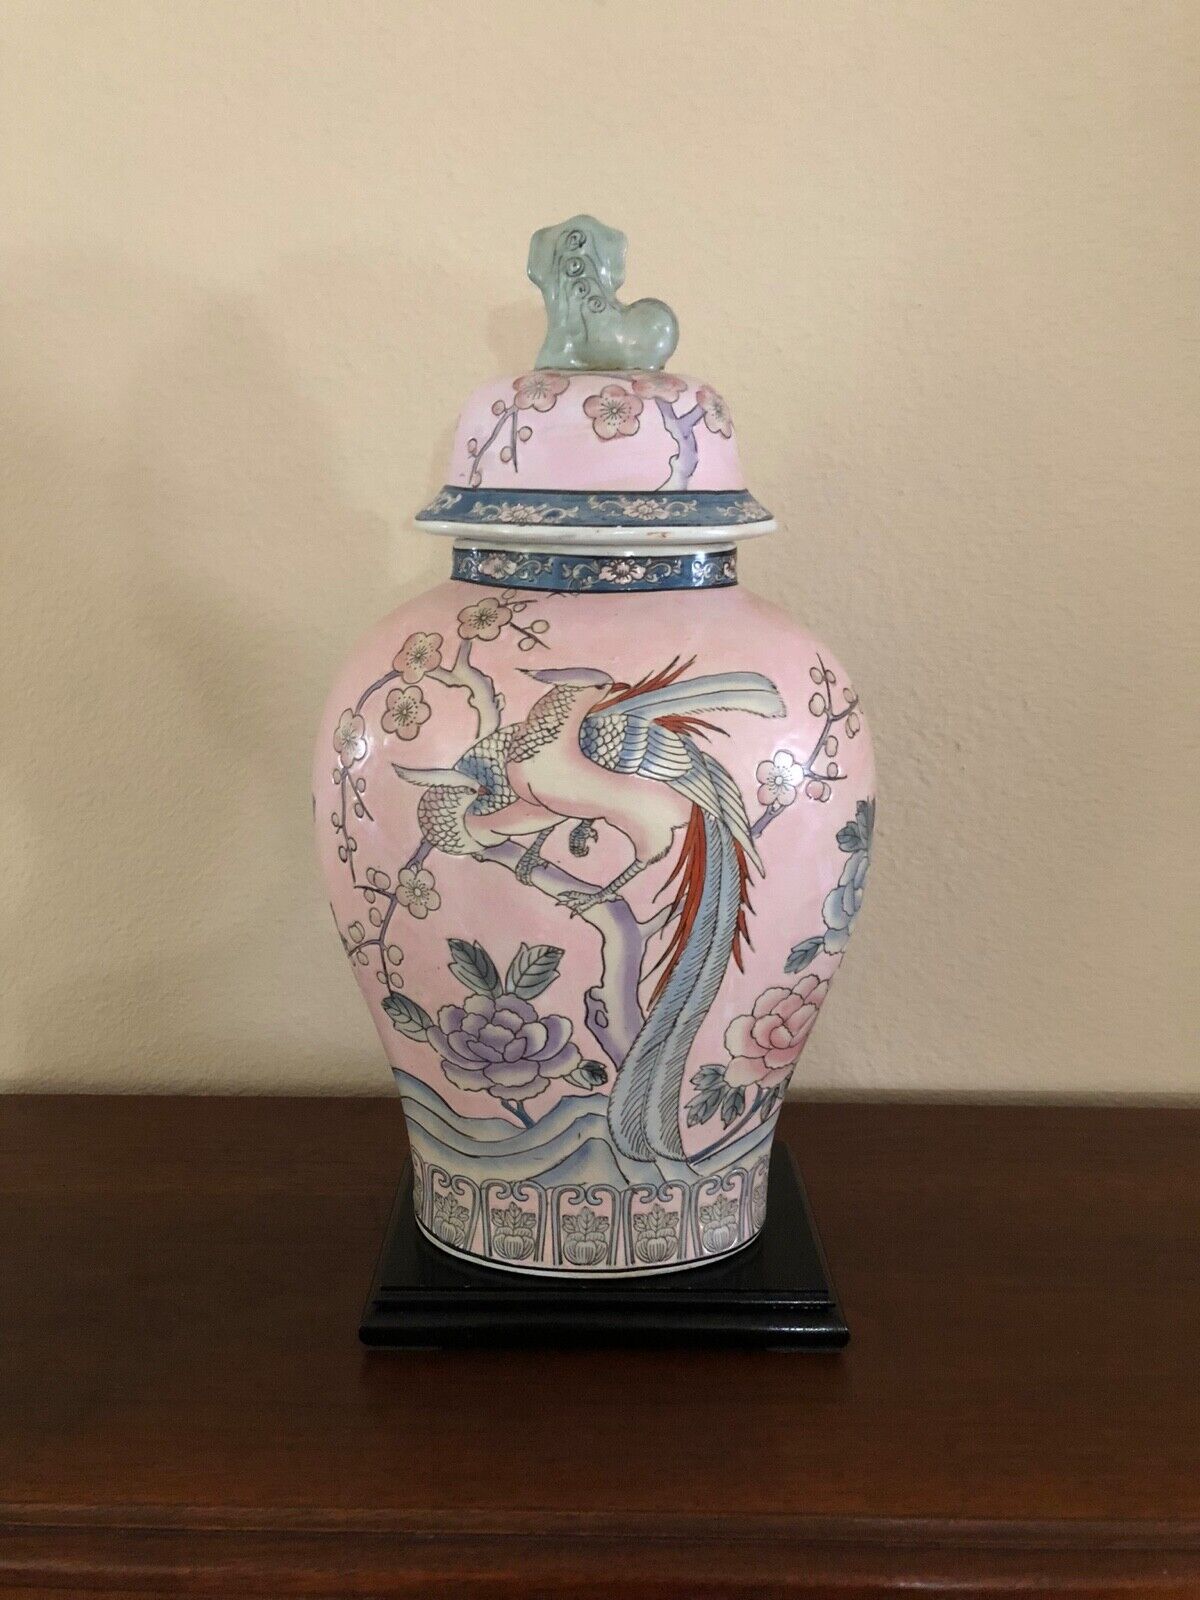 Vintage Japanese Porcelain Temple Jar with Foo Dog Finial, Pink with Bird Motif